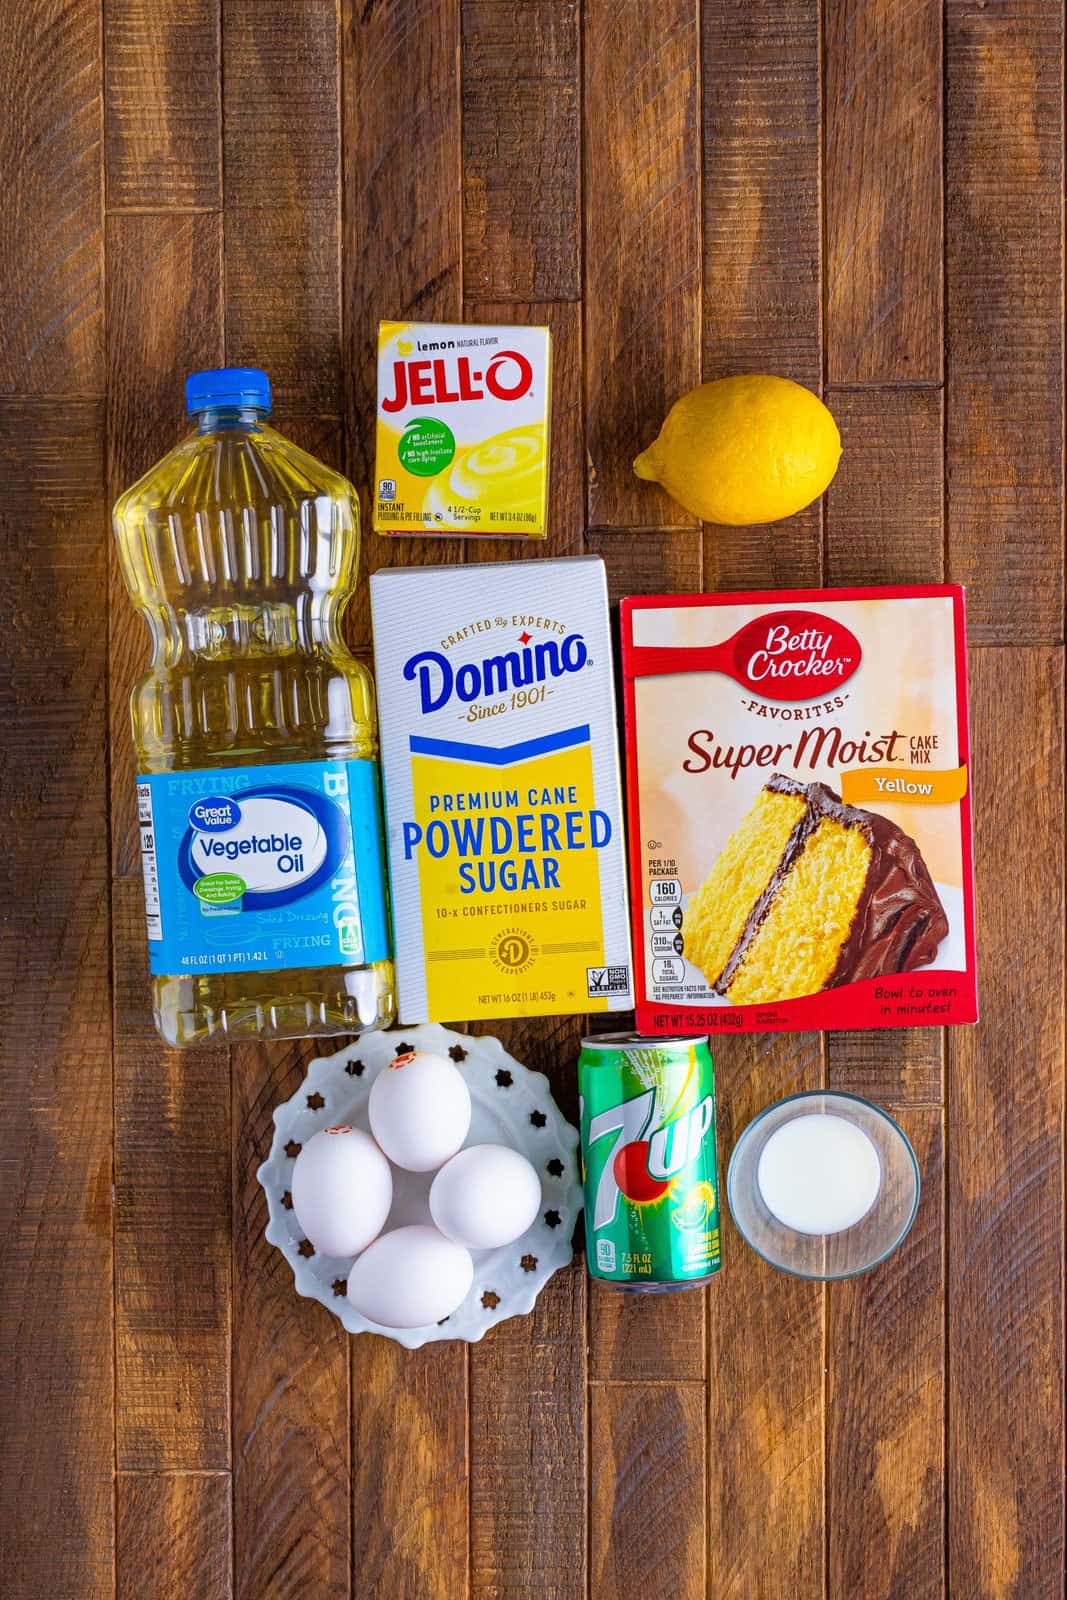 yellow cake mix, lemon instant pudding, 7Up soda, eggs, oil, lemon, sour cream.